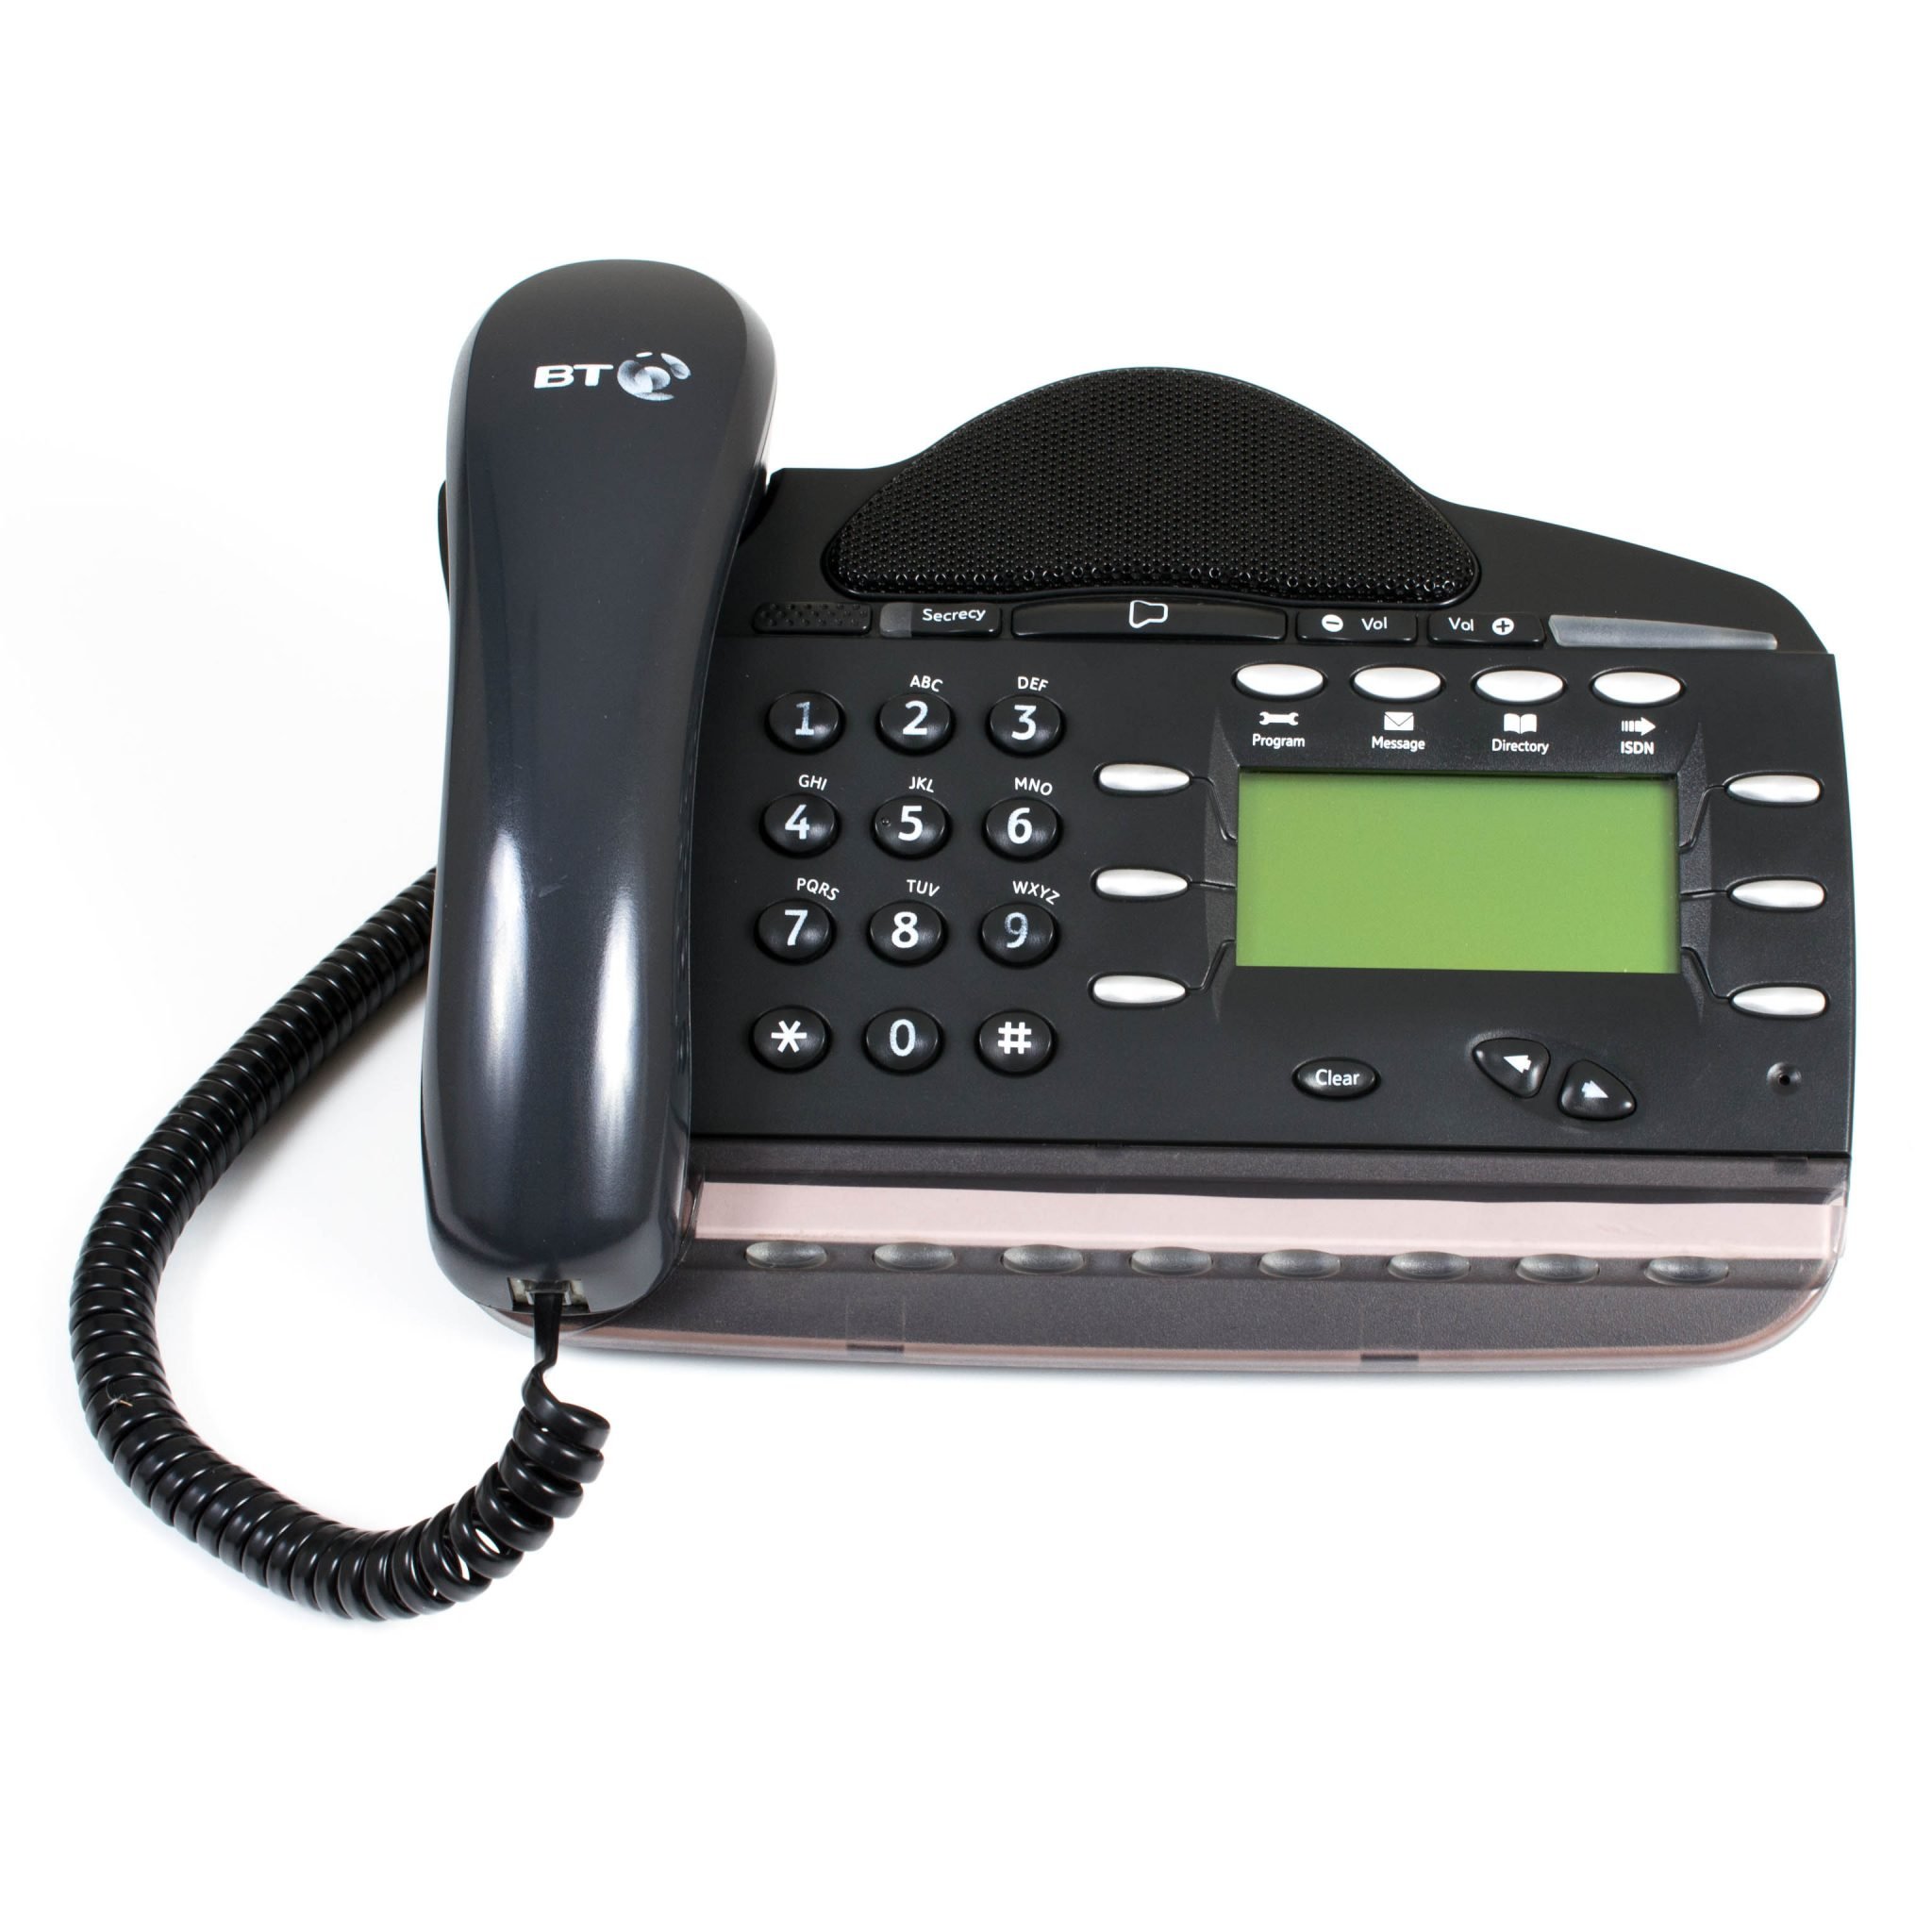 Sale телефон. V8 телефон. Телефон 8d. Cobra telephone answering System. Телефон BT relate 700 CD.